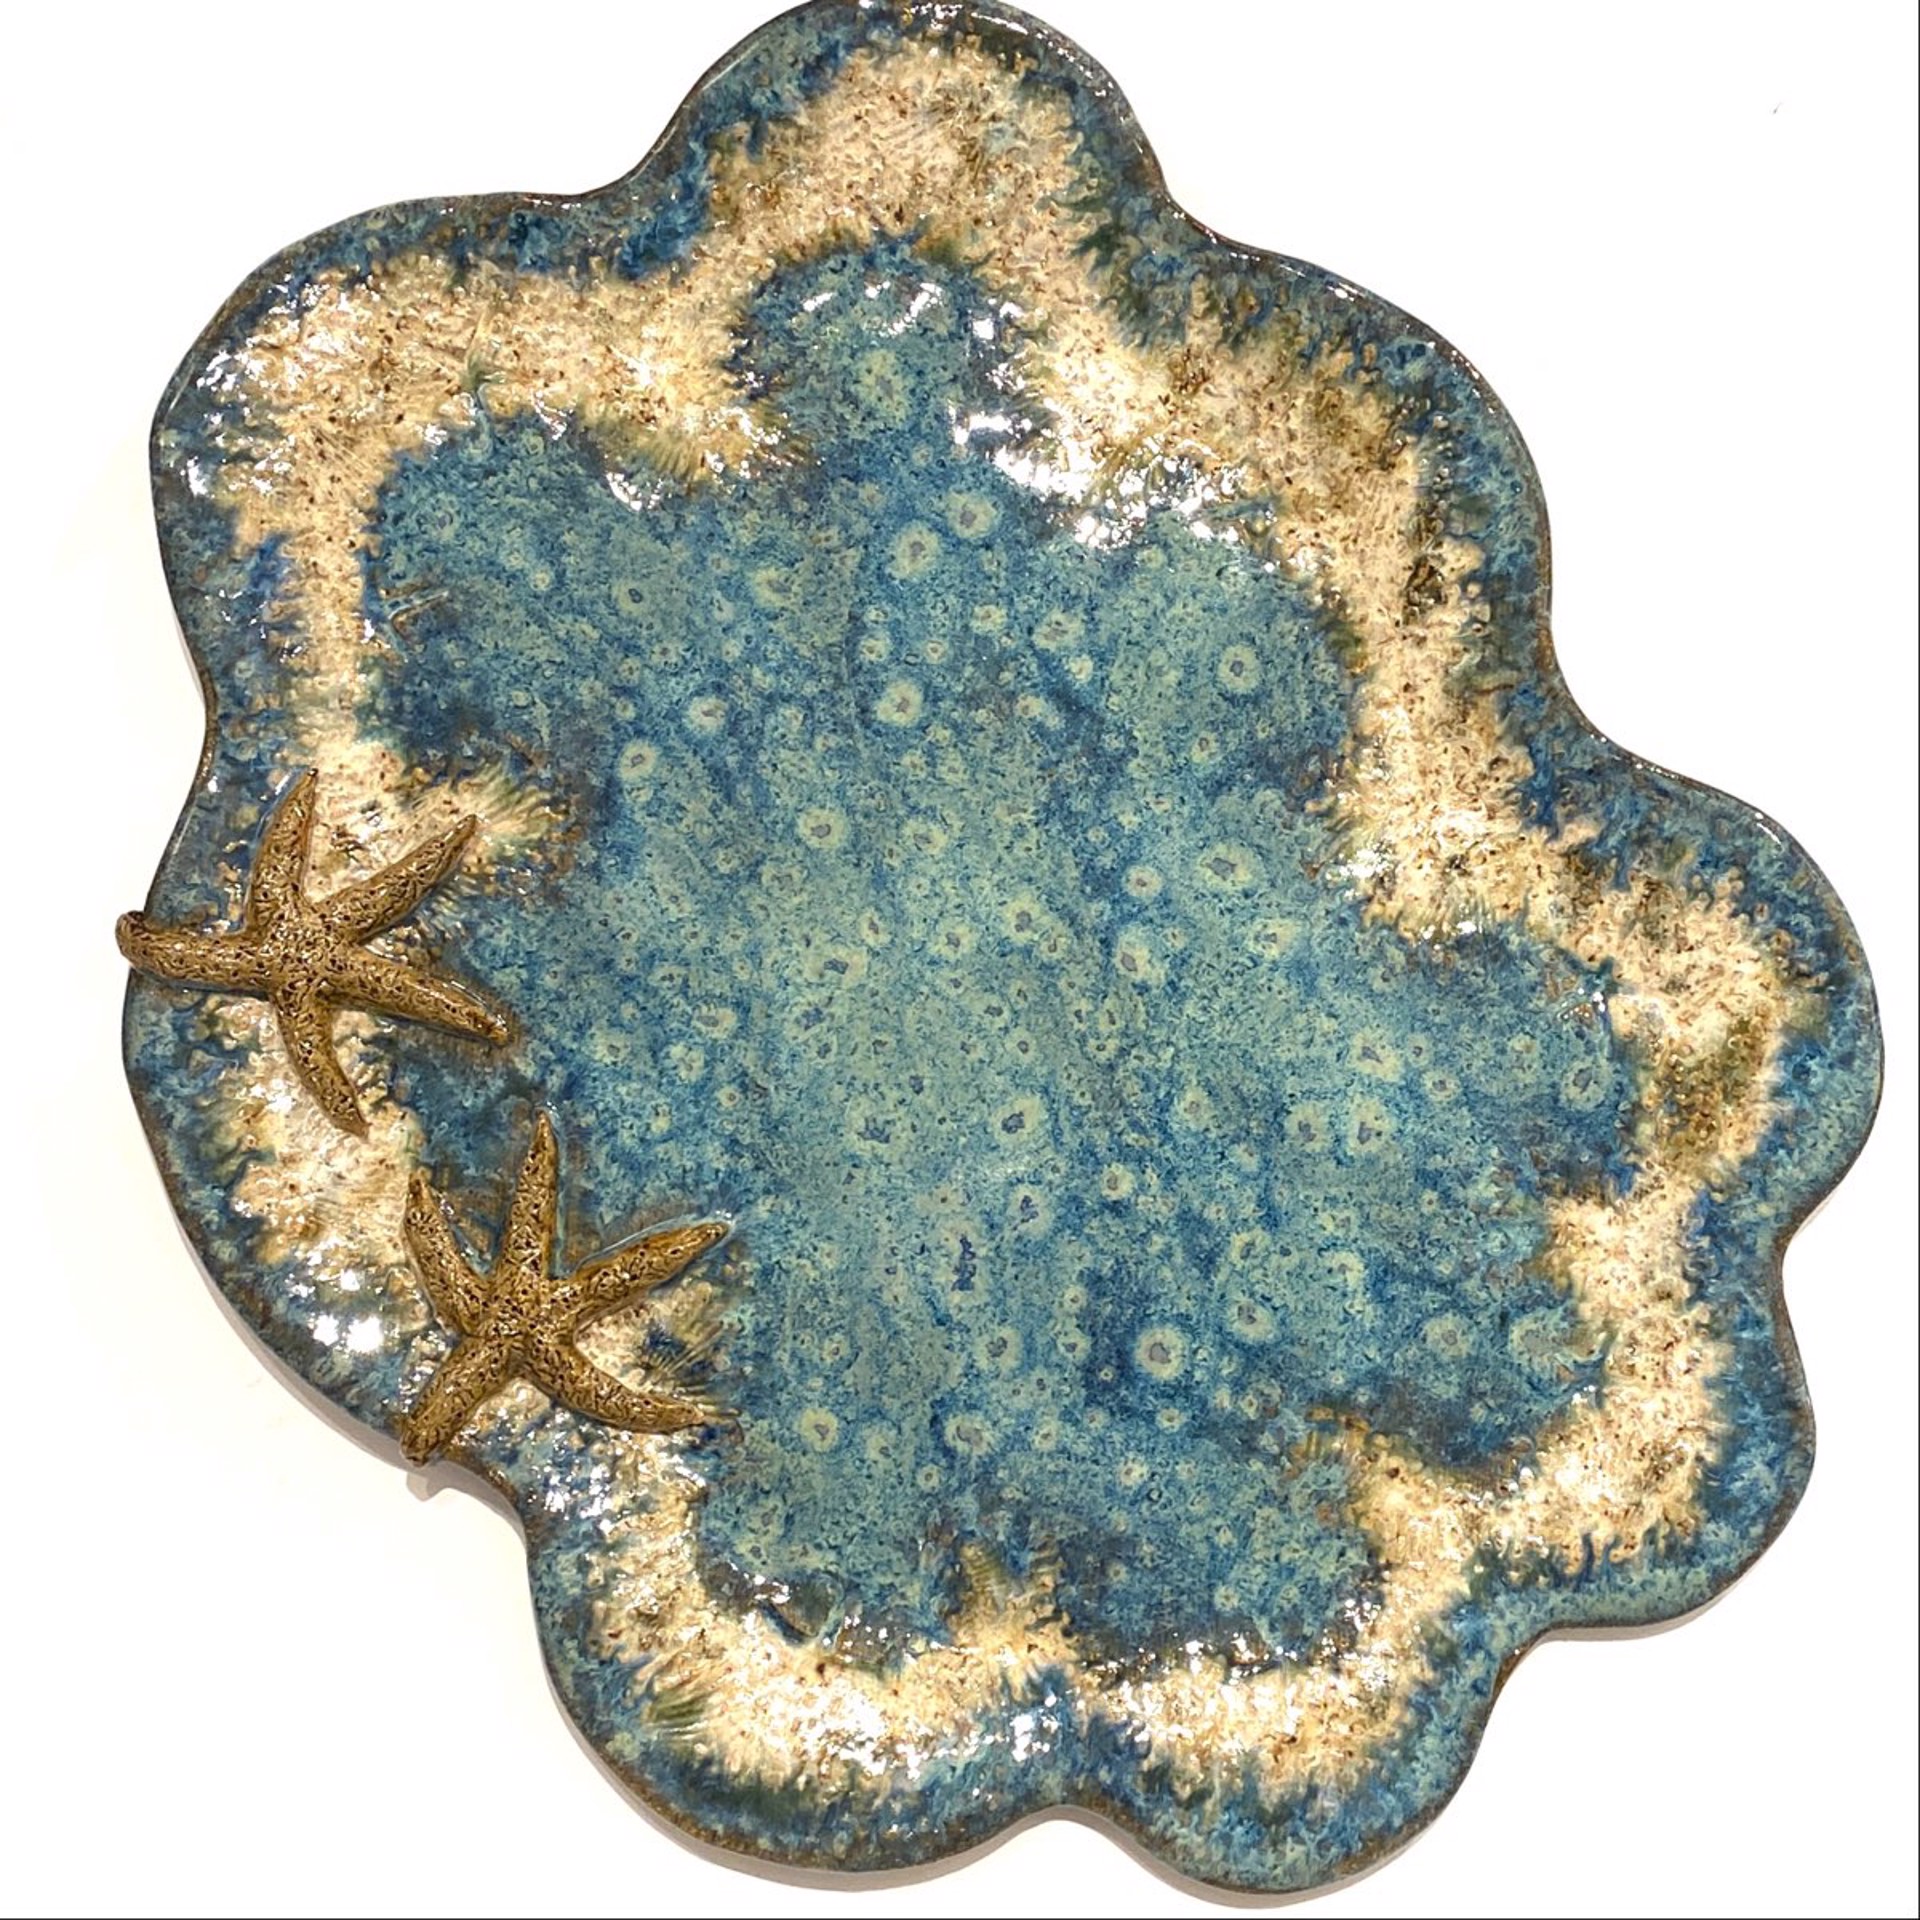 LG23-966 Large Platter with Two Starfish (Blue Glaze) by Jim & Steffi Logan